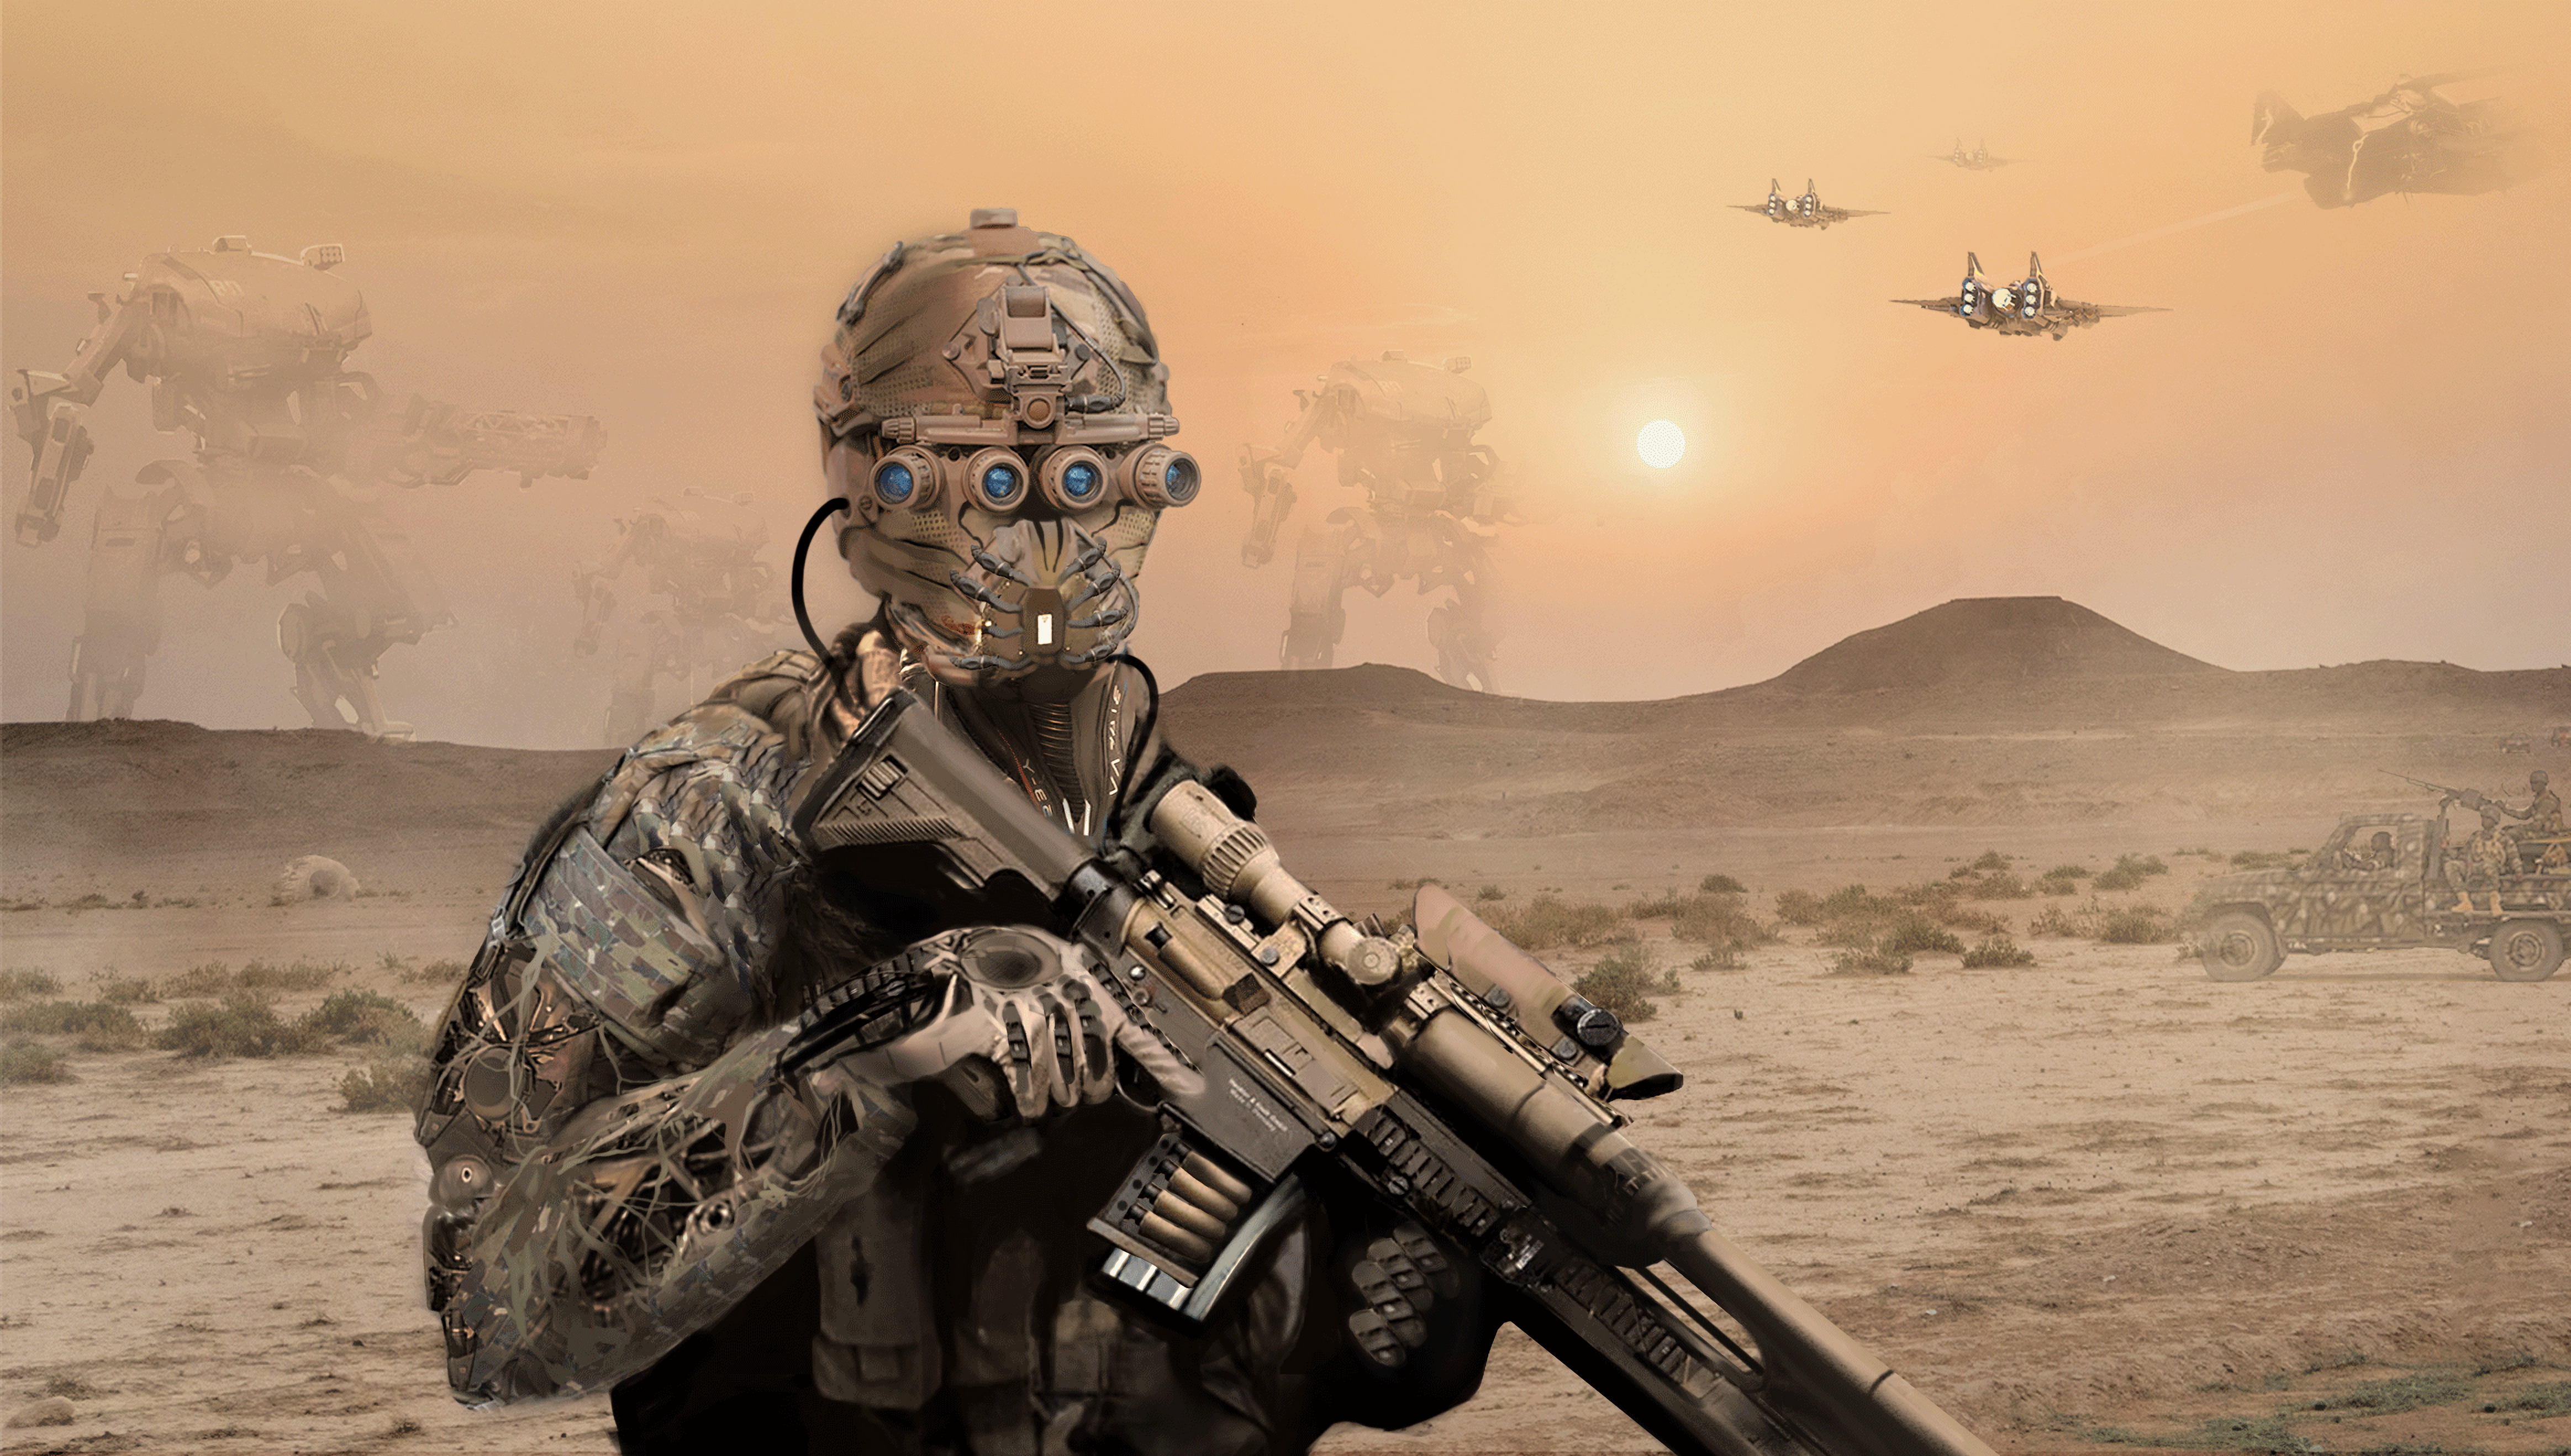 Military Soldier Mask Rifle Desert